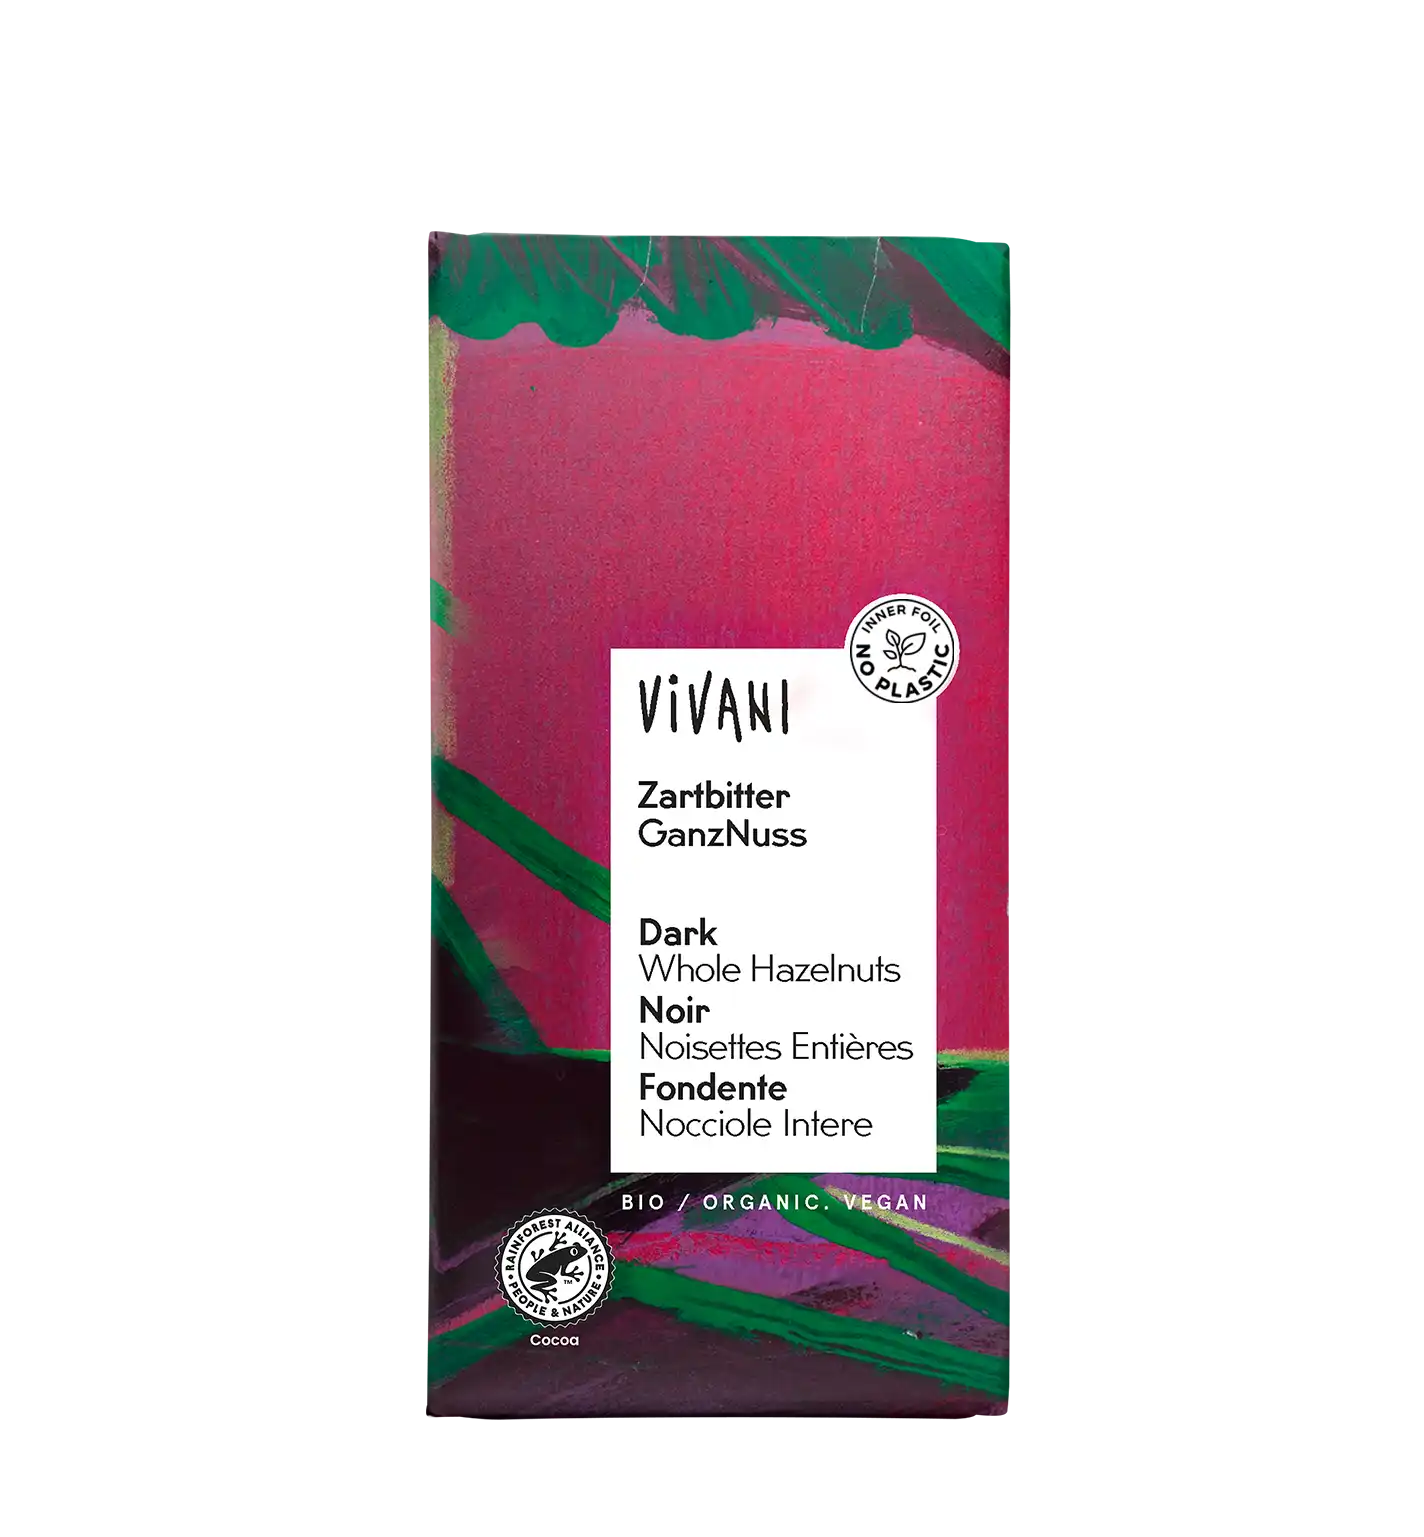 VIVANI's organic Dark Chocolate with roasted whole hazelnuts